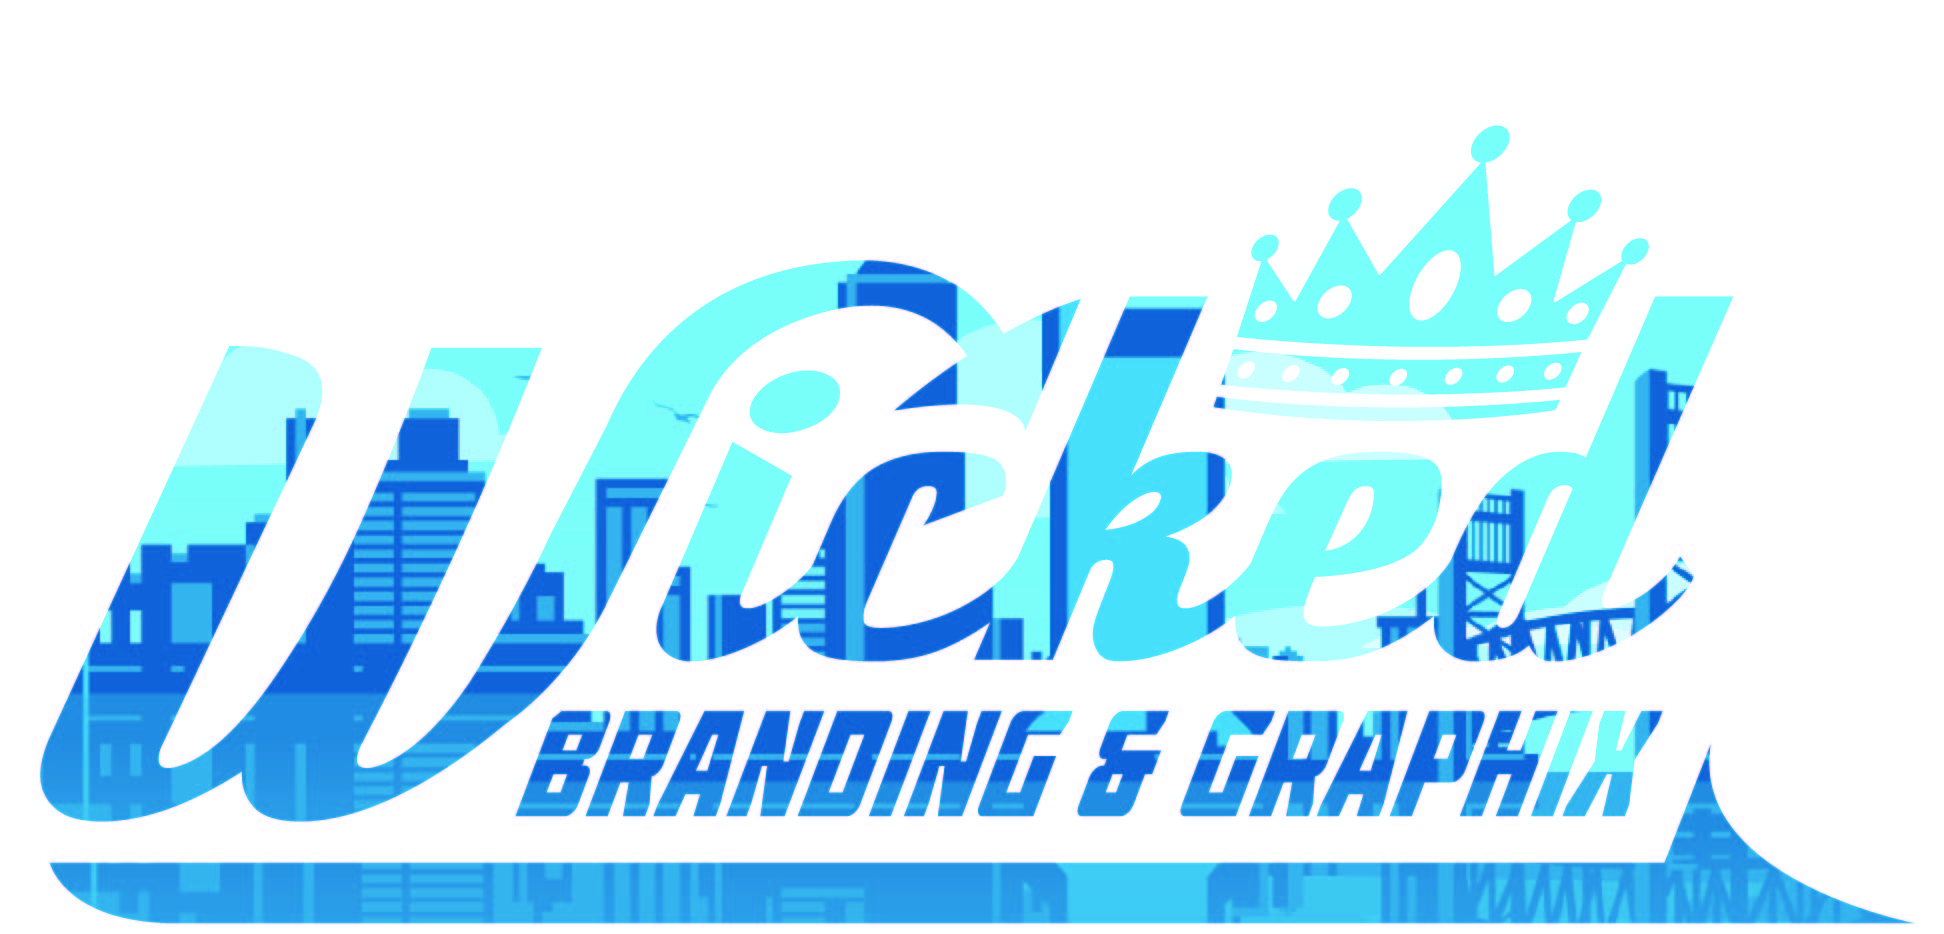 WICKED BRANDING & GRAPHIX's Logo